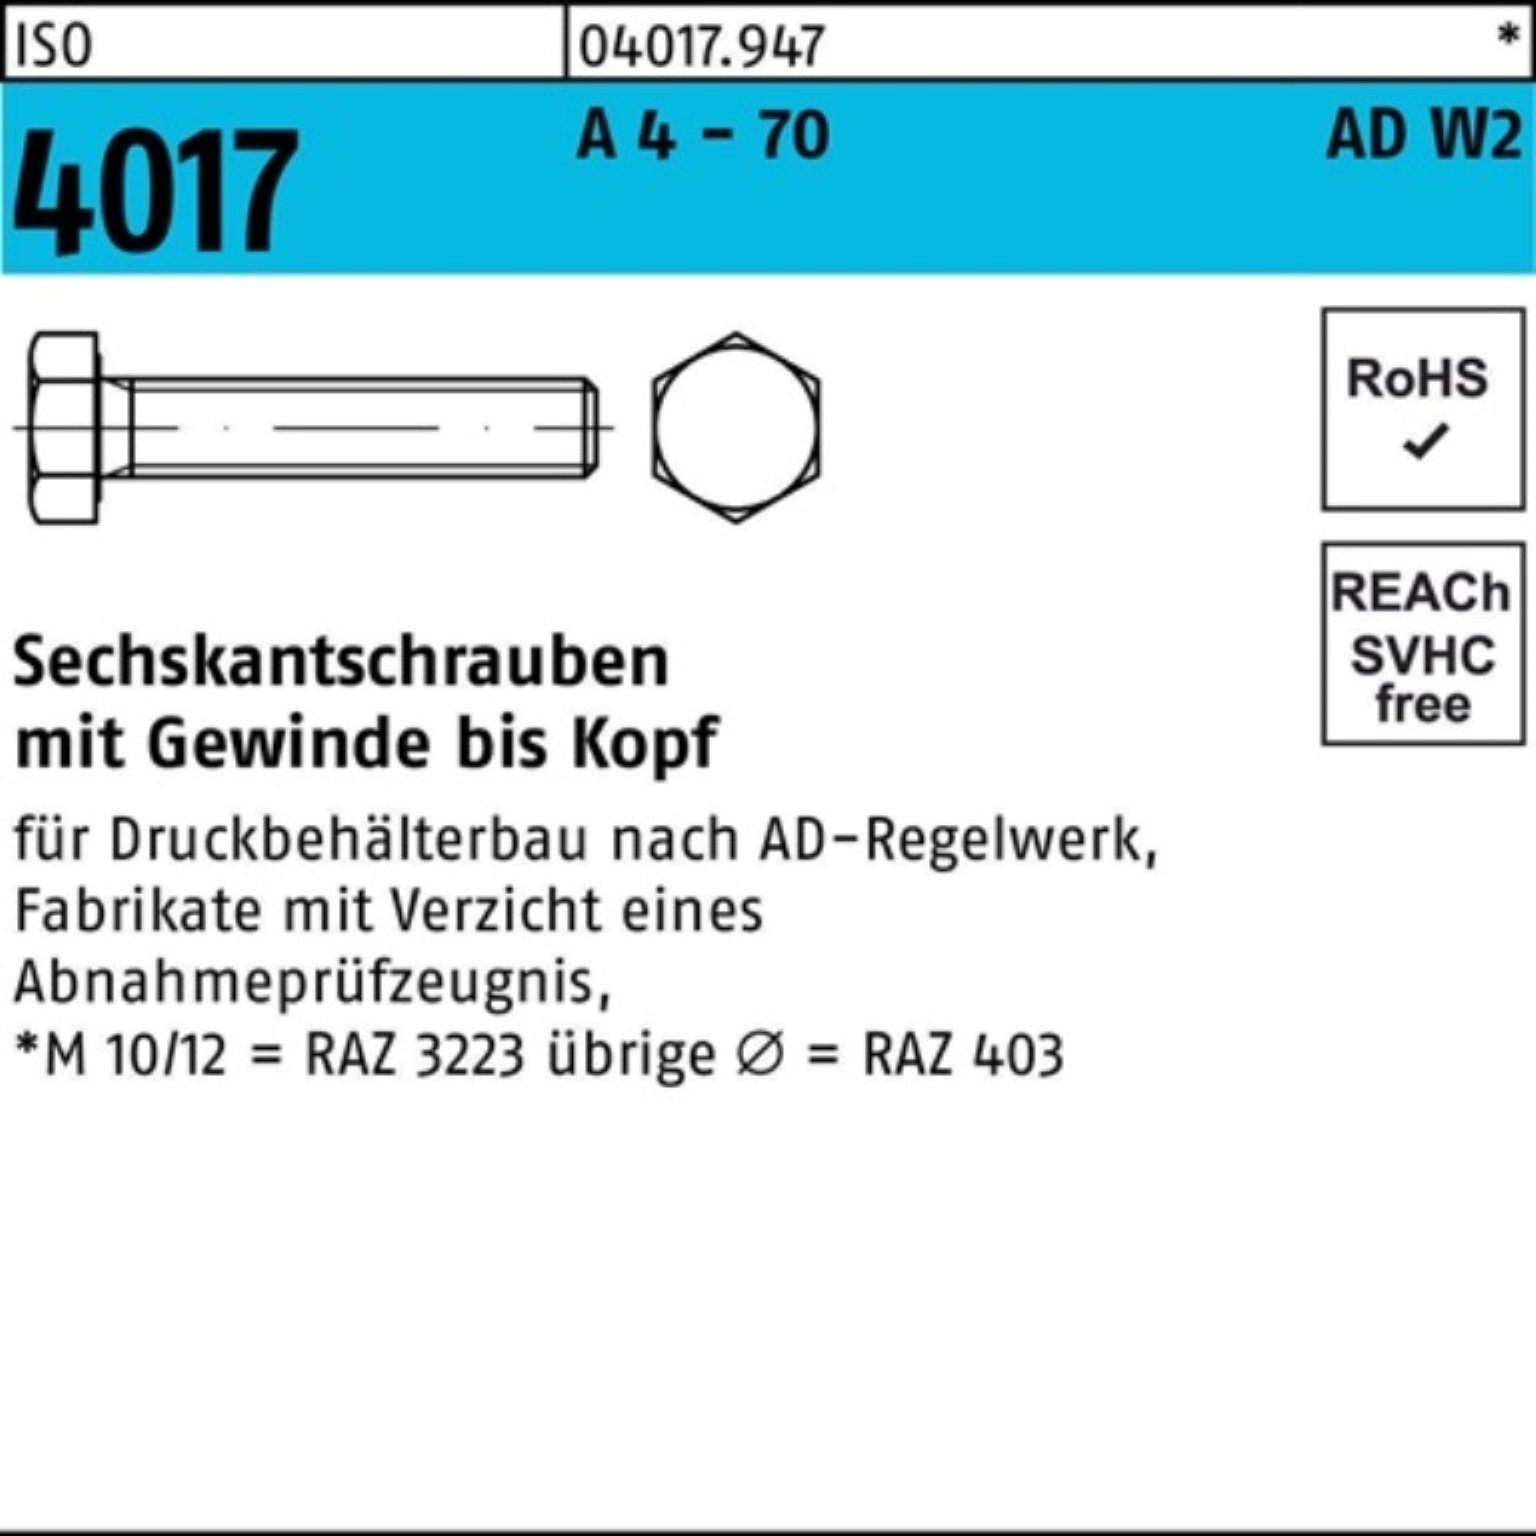 Bufab Sechskantschraube 100er Pack Sechskantschraube ISO 4017 VG M12x 45 A 4 - 70 AD-W2 50 St